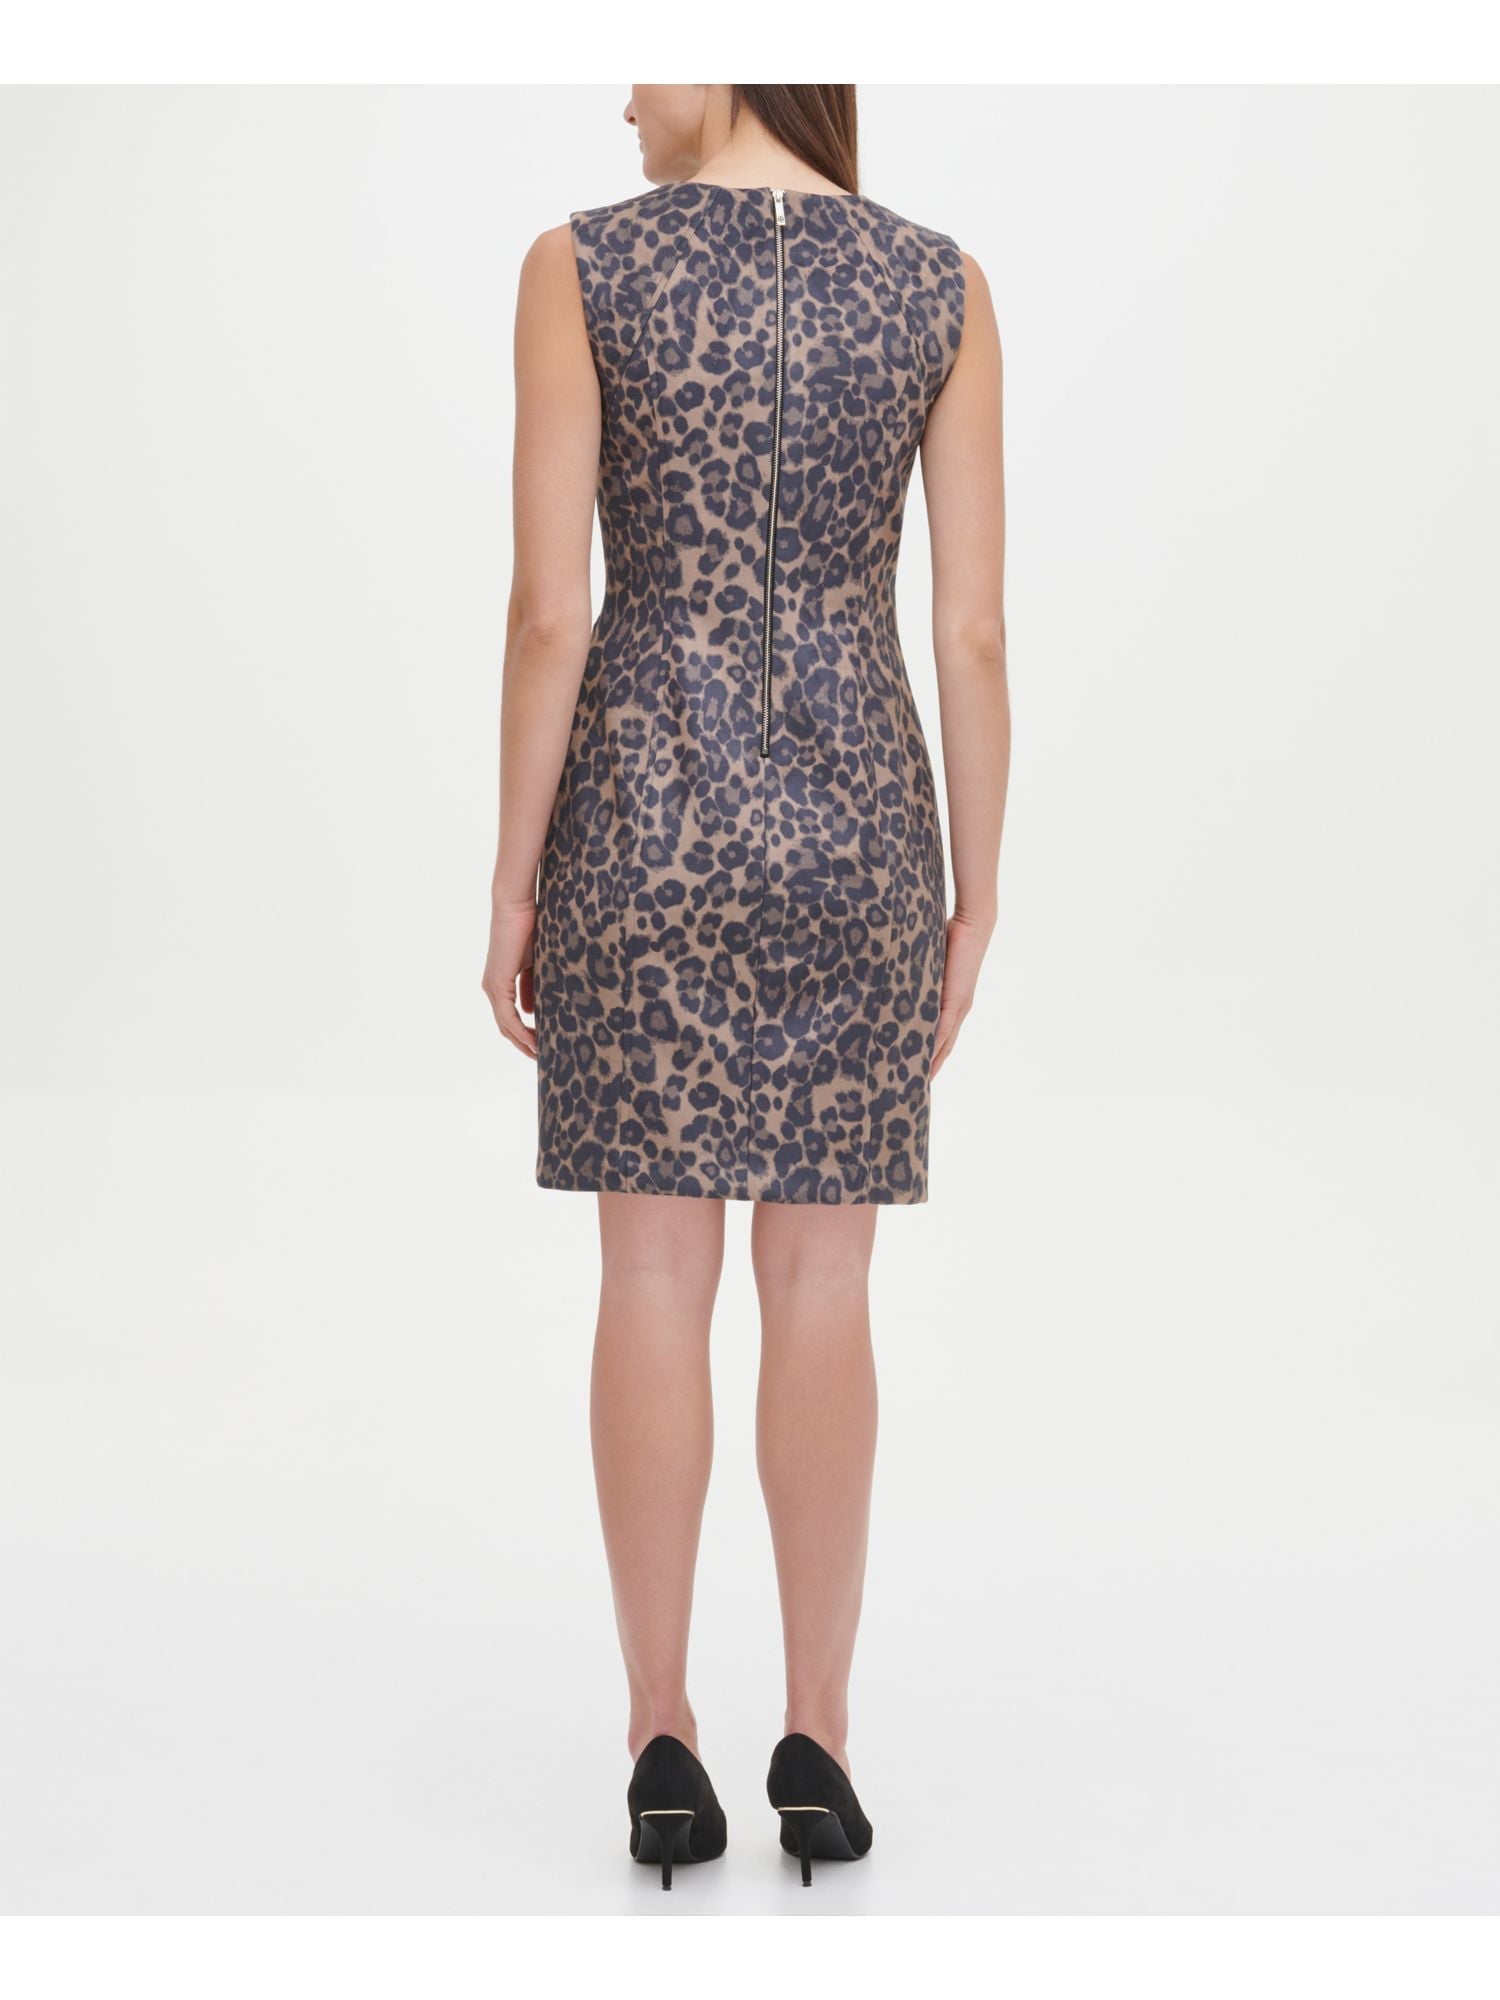 Tommy Hilfiger Women's Animal Print Sleeveless Short Sheath Dress Brown Size 2